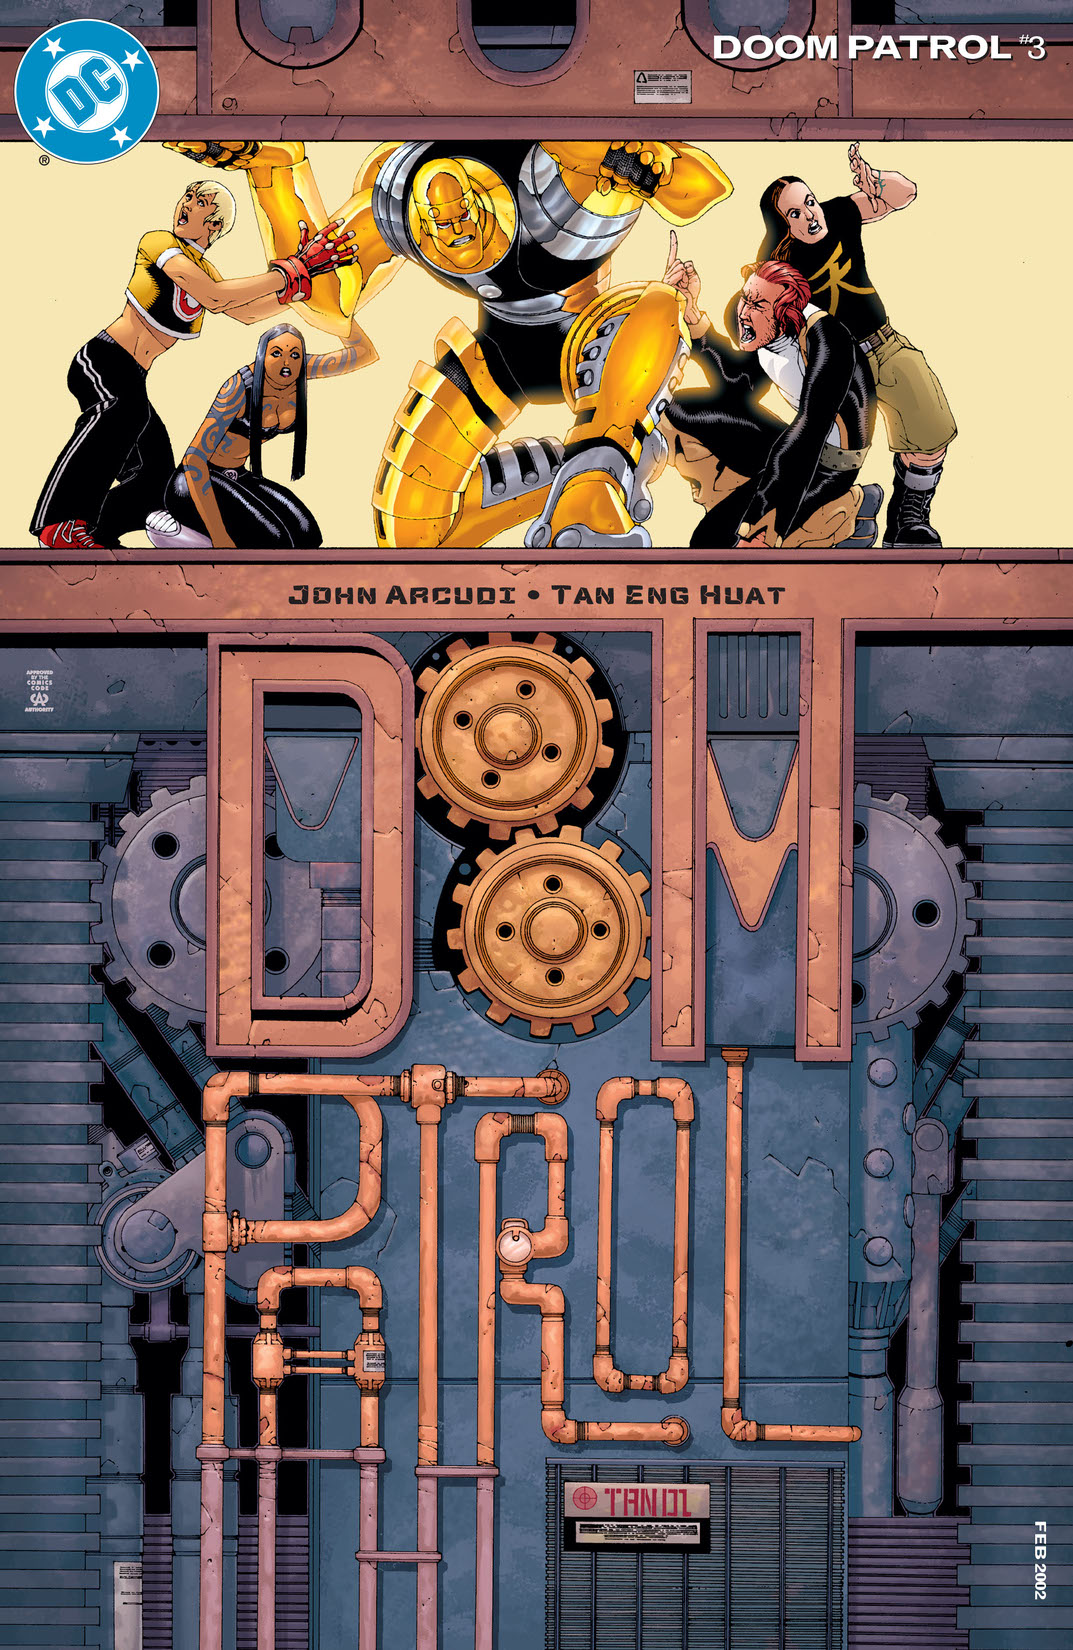 Doom Patrol (2001-) #3 preview images